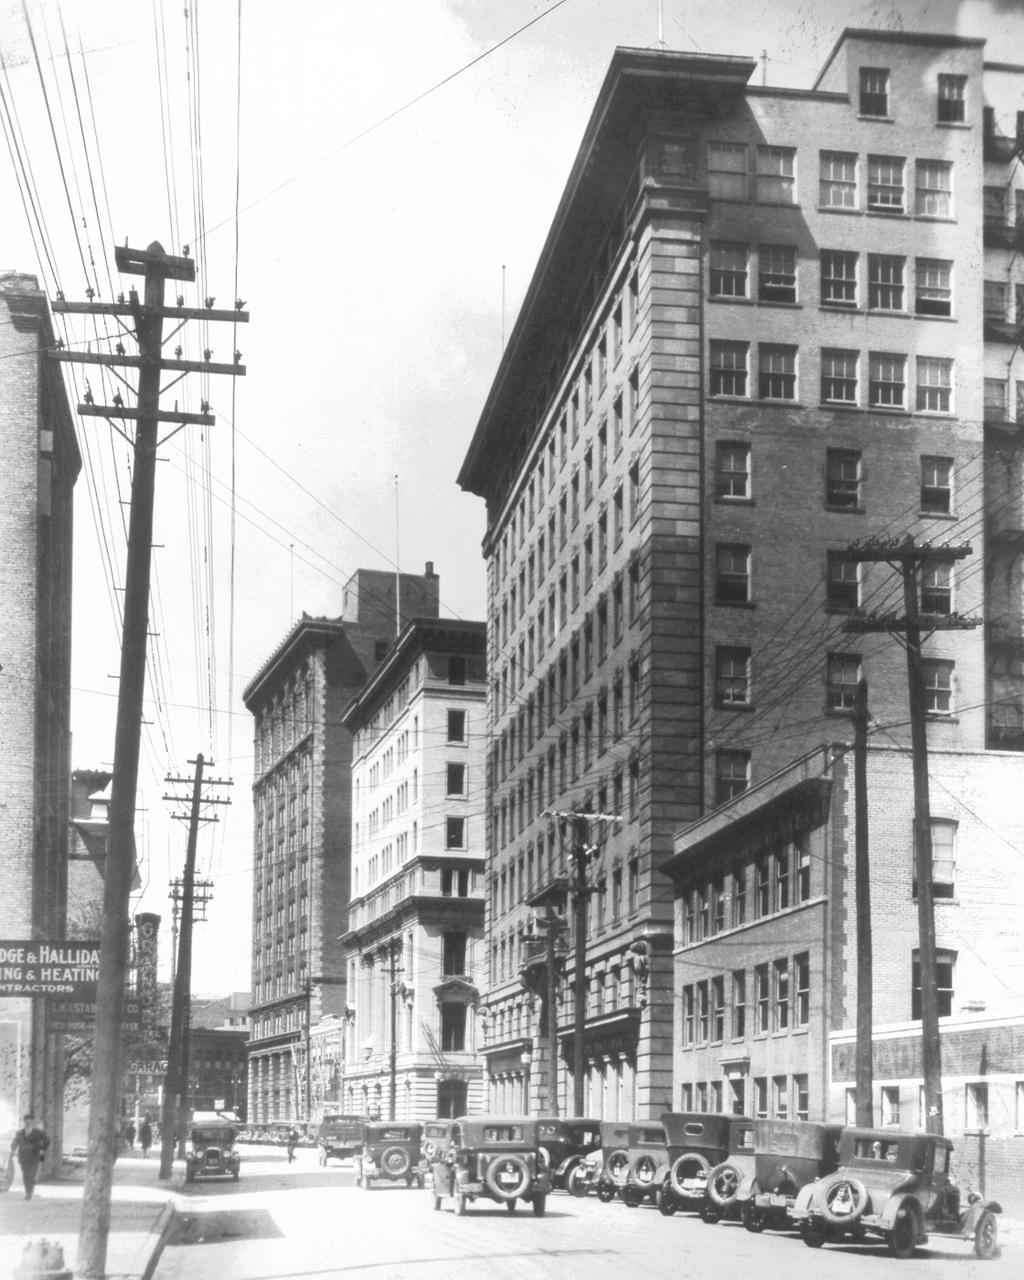 191 LOMBARD AVENUE (387 MAIN STREET) UNION TOWER BUILDING 3 2 1 Plate 4 Lombard Avenue, ca.1915.